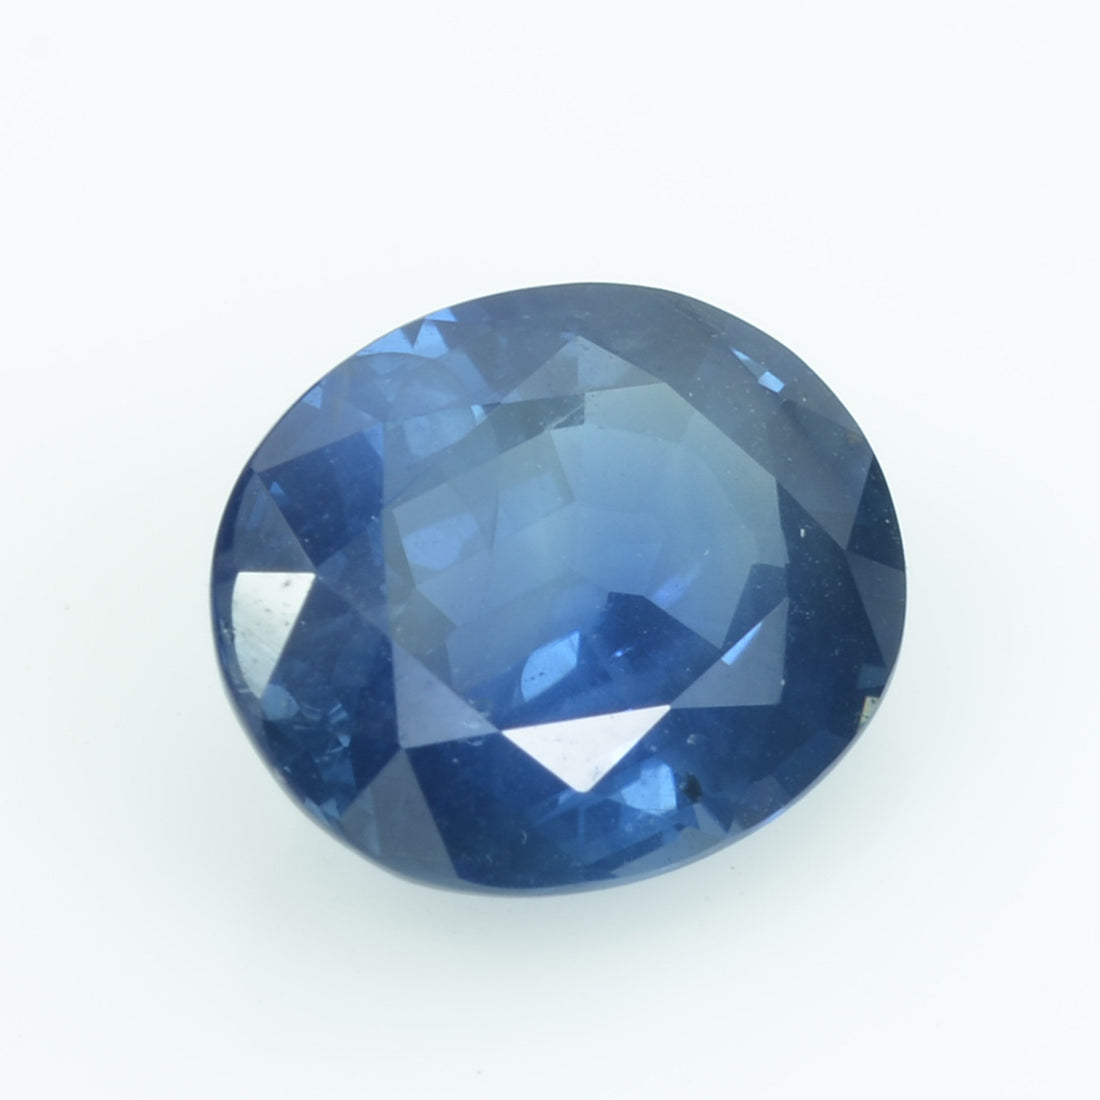 3.39 cts Natural Blue Sapphire Loose Gemstone Oval Cut - Thai Gems Export Ltd.